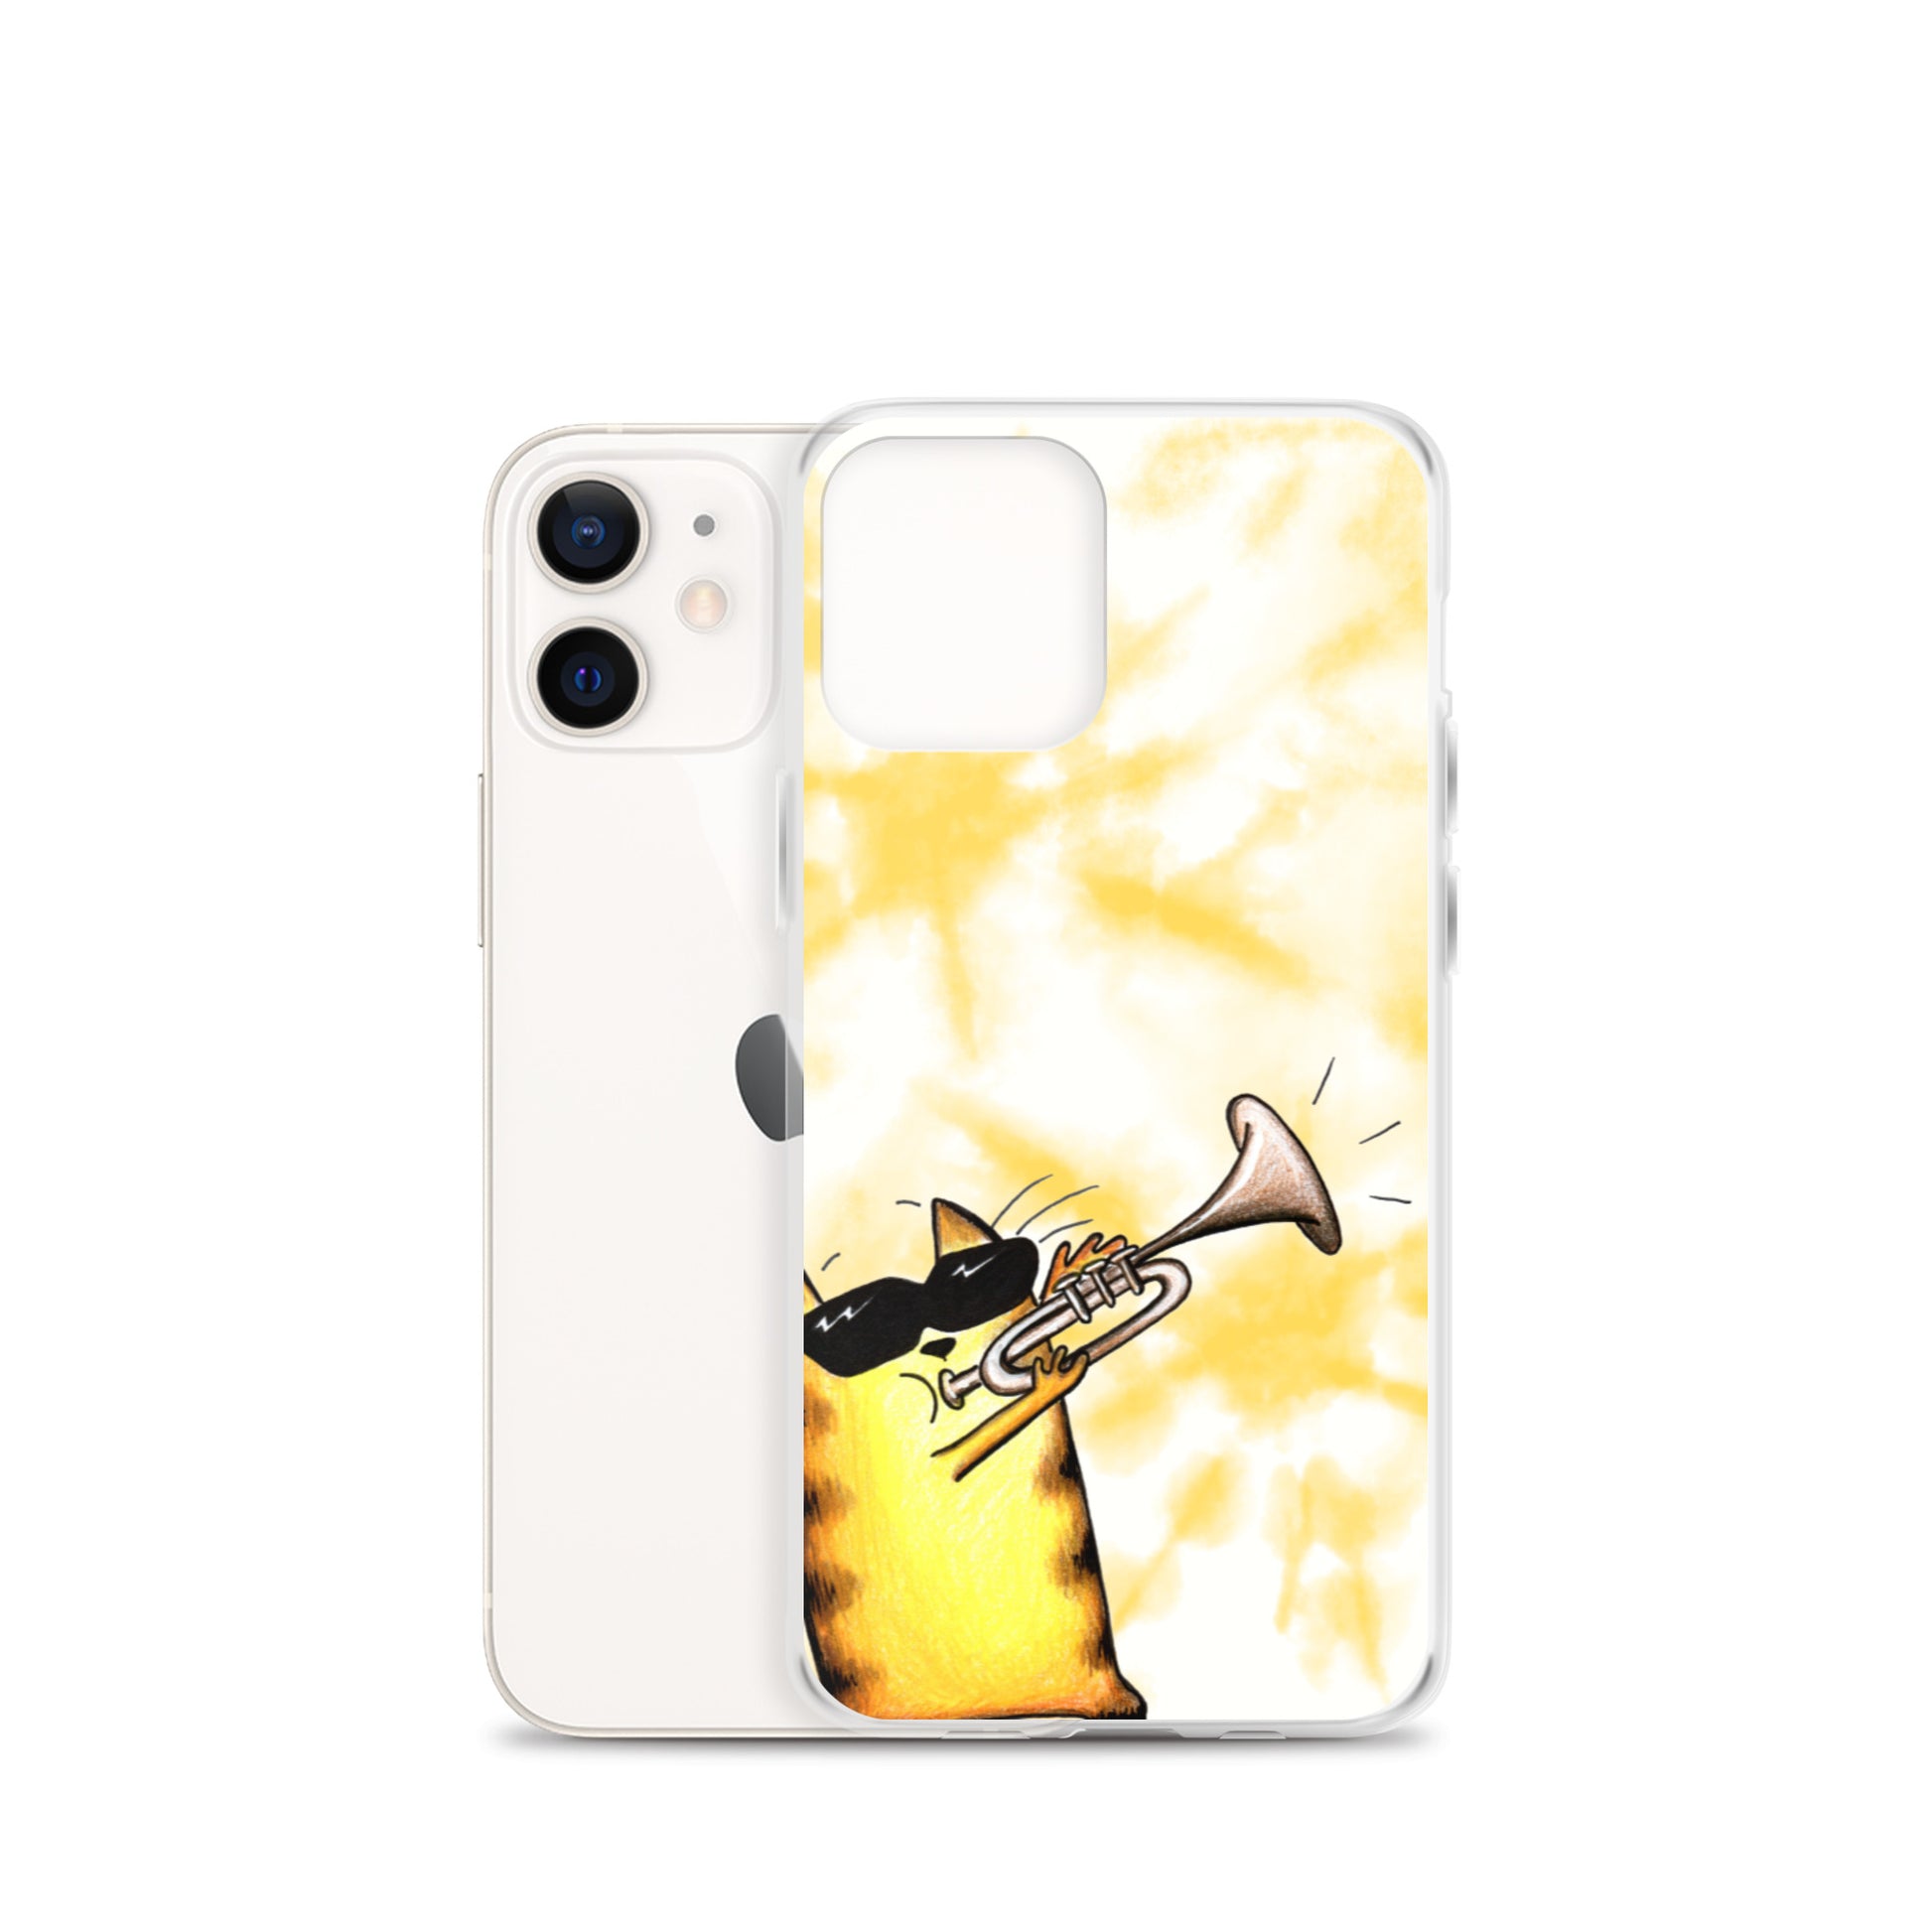 flexible yellow batik Iphone 12 mini case with cat plying trombone print